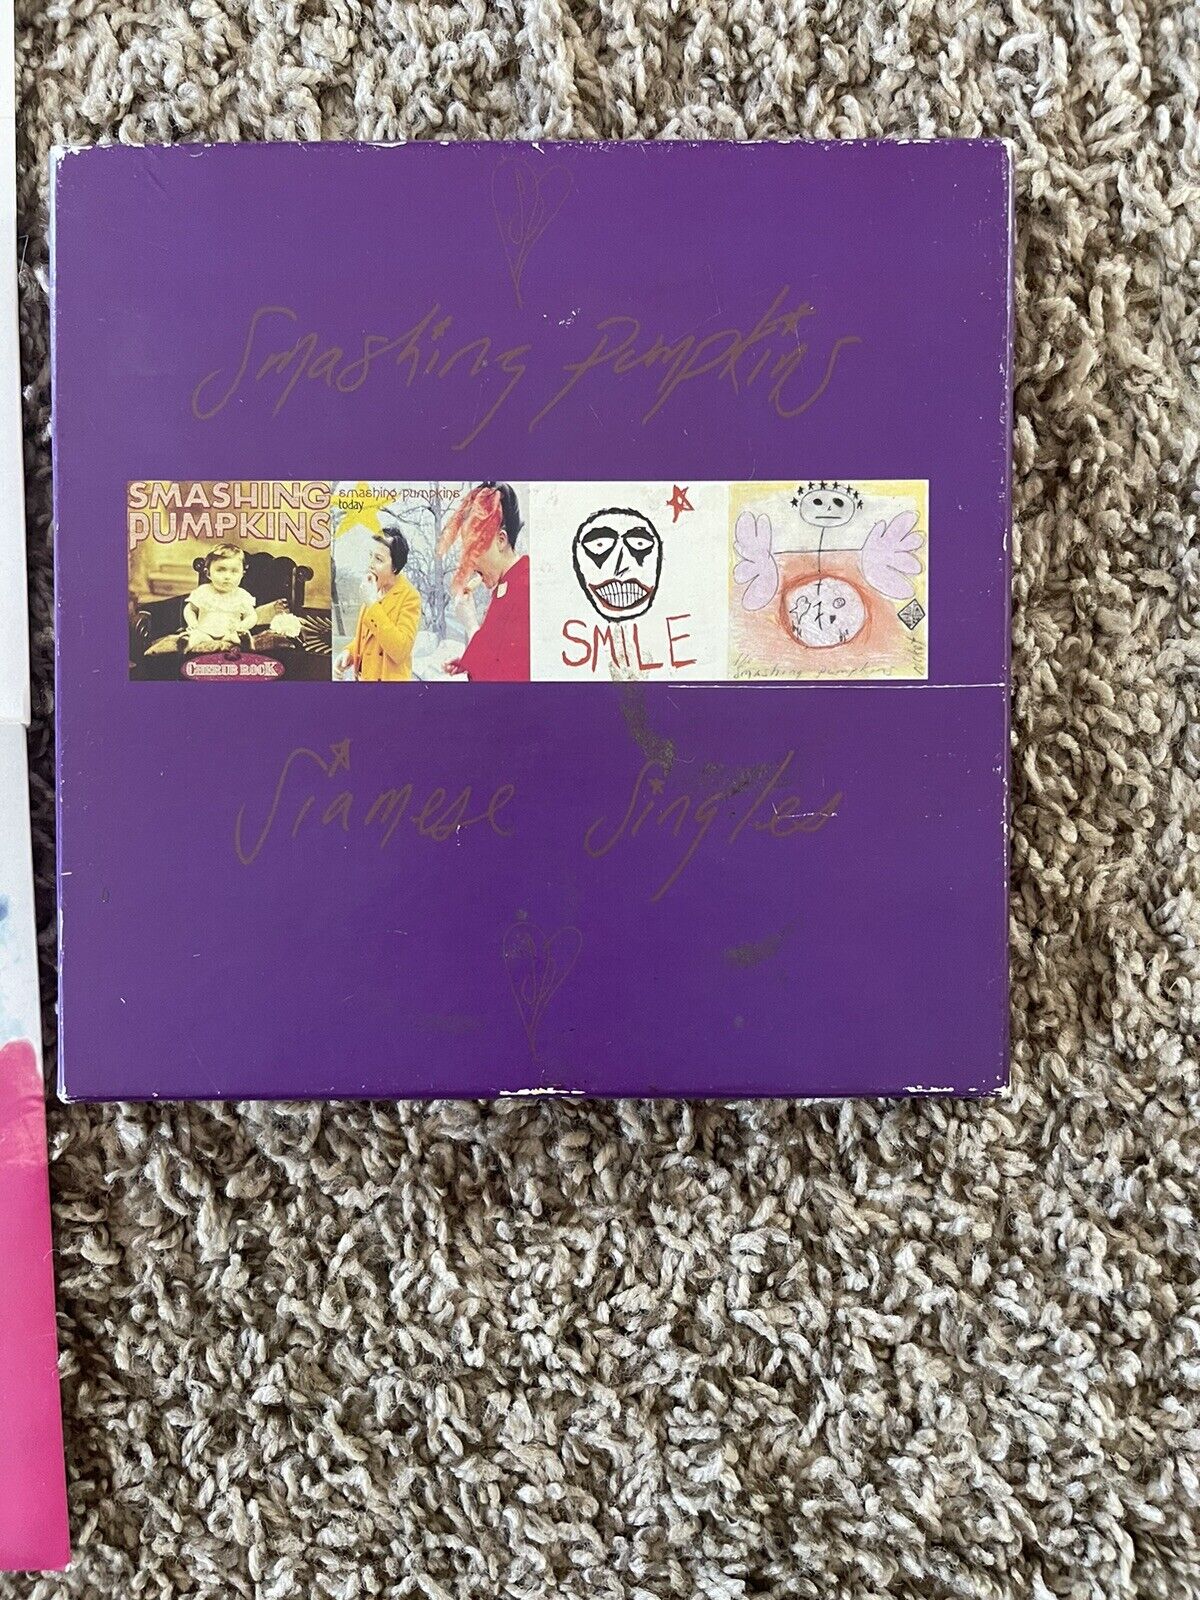 Smashing Pumpkins- “Siamese Singles” Ltd Edition Vinyl 7” Single Box Set